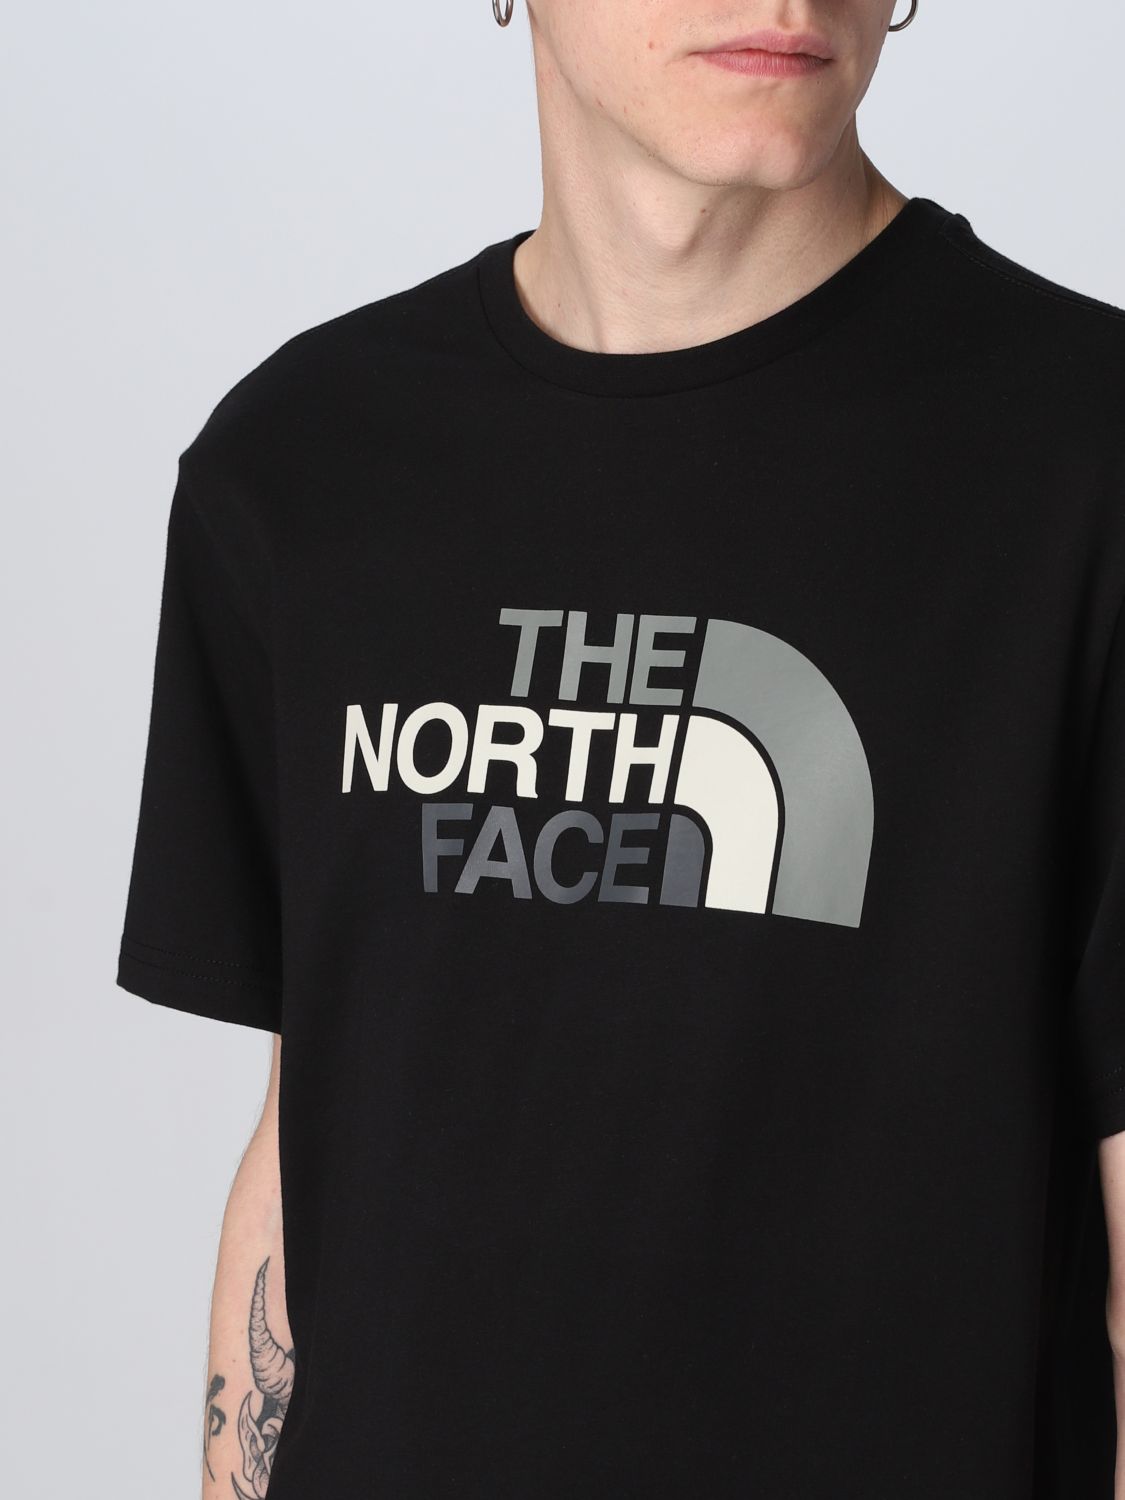 T-Shirt The North Face: The North Face Herren T-Shirt schwarz 3